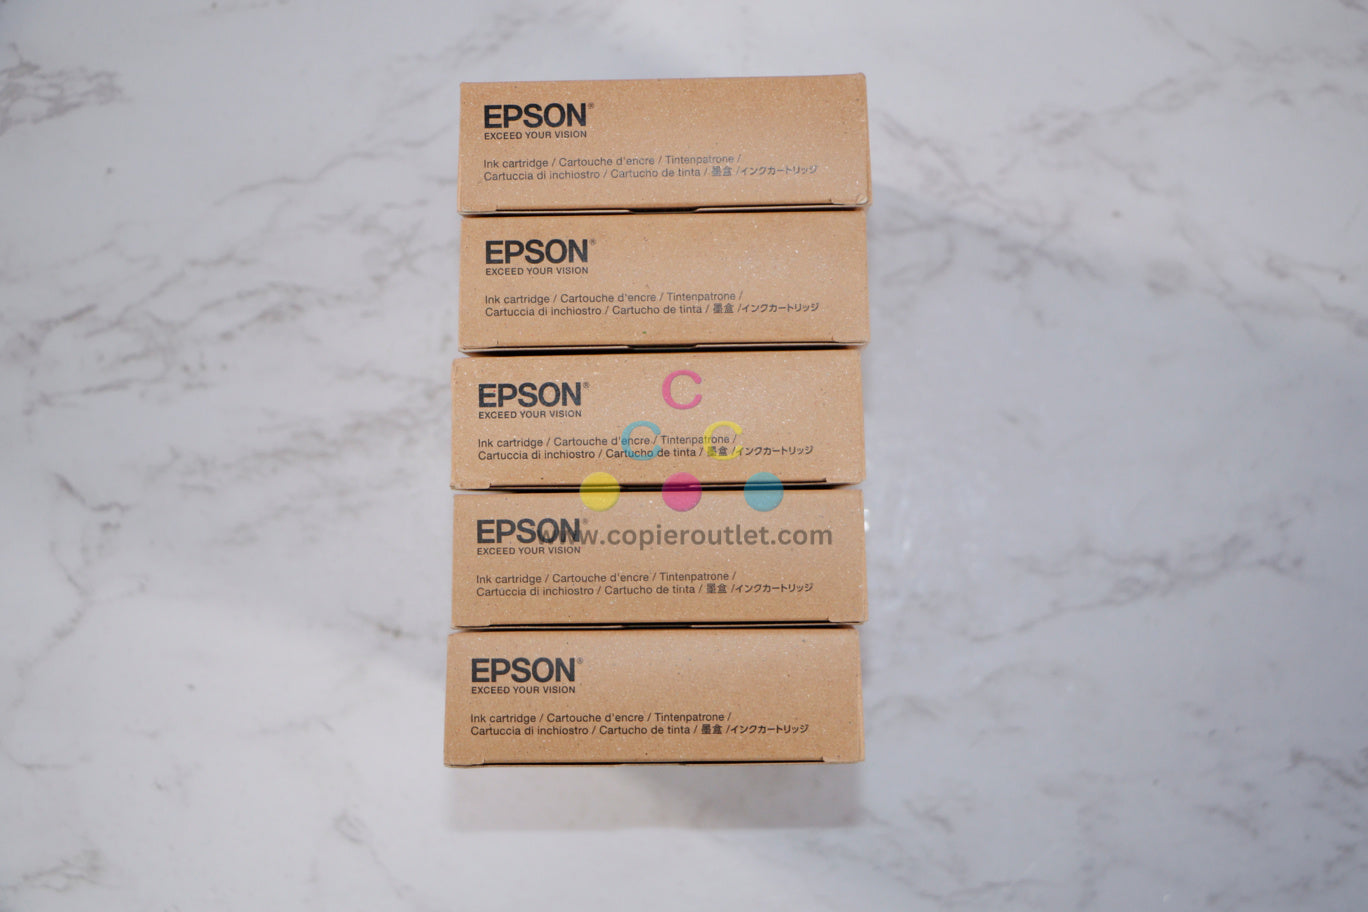 5 New OEM Epson SureColor-P5000,5070 Inks Green,LBK,MBK,LLBK T913B, T9137,38,39